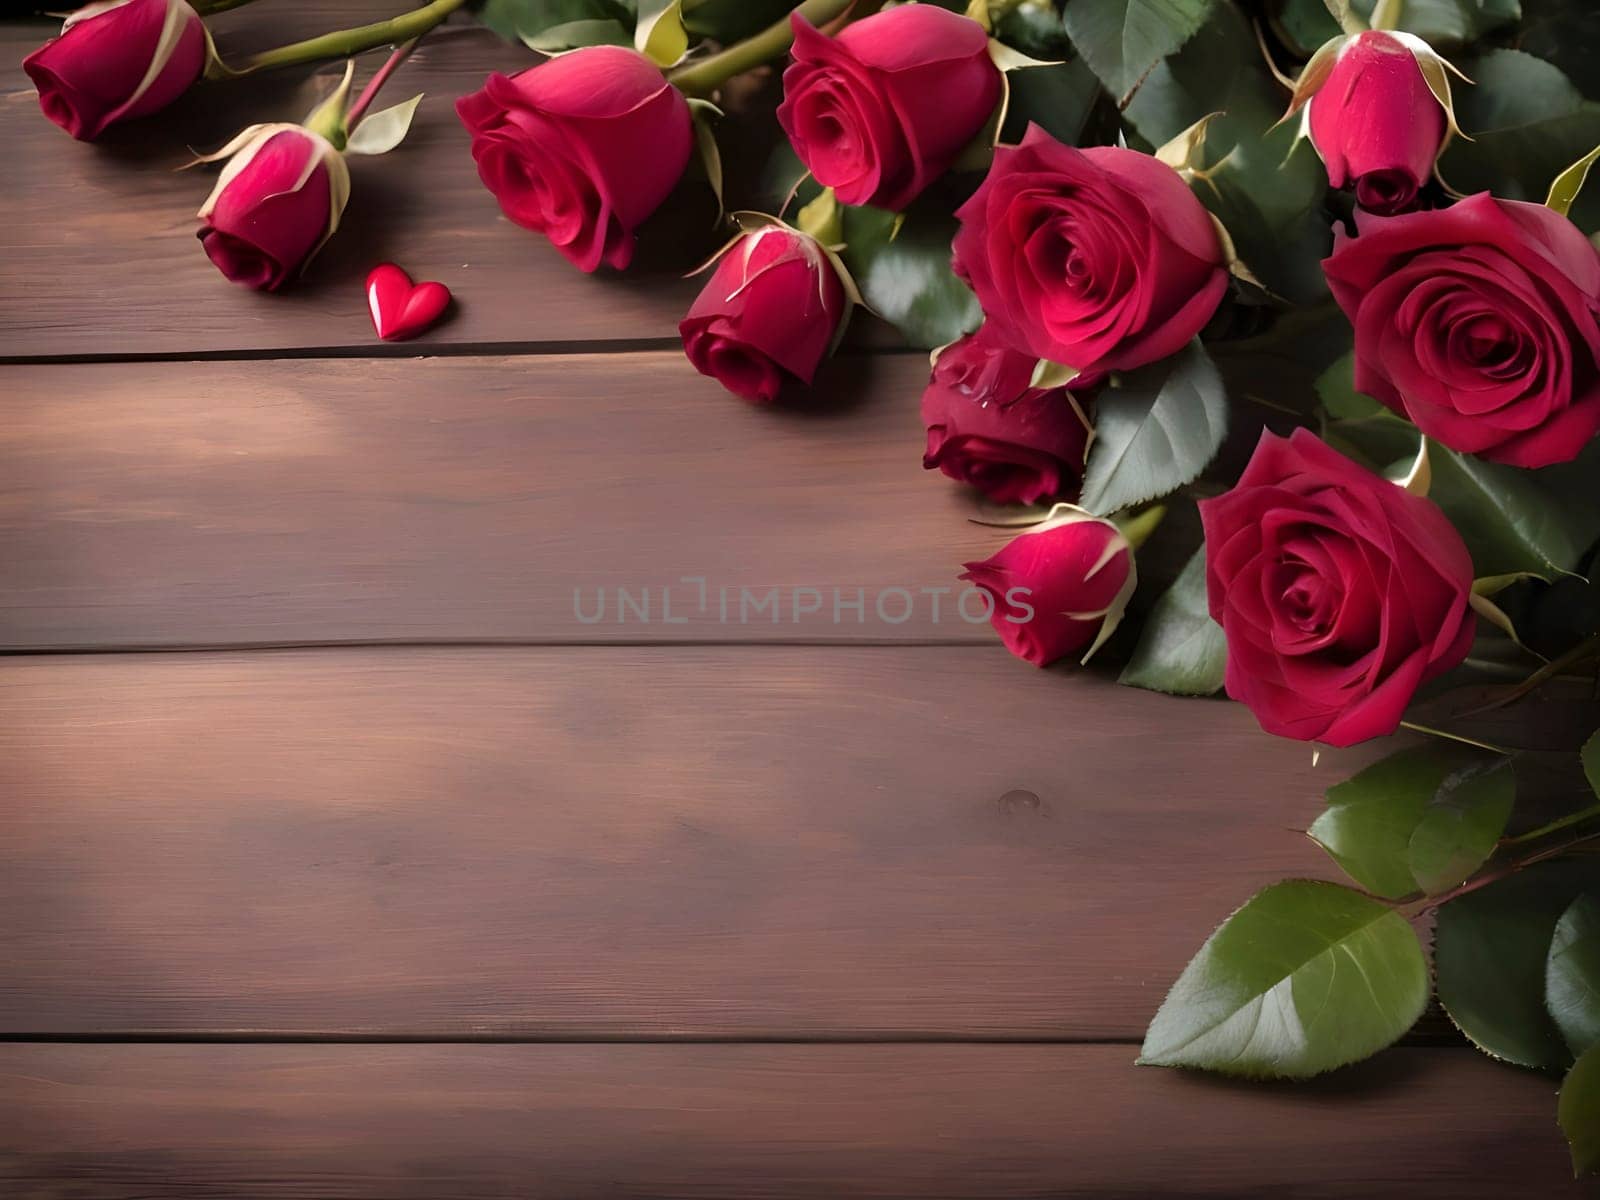 Floral Elegance. Red Roses Arranged on Wooden Surface.